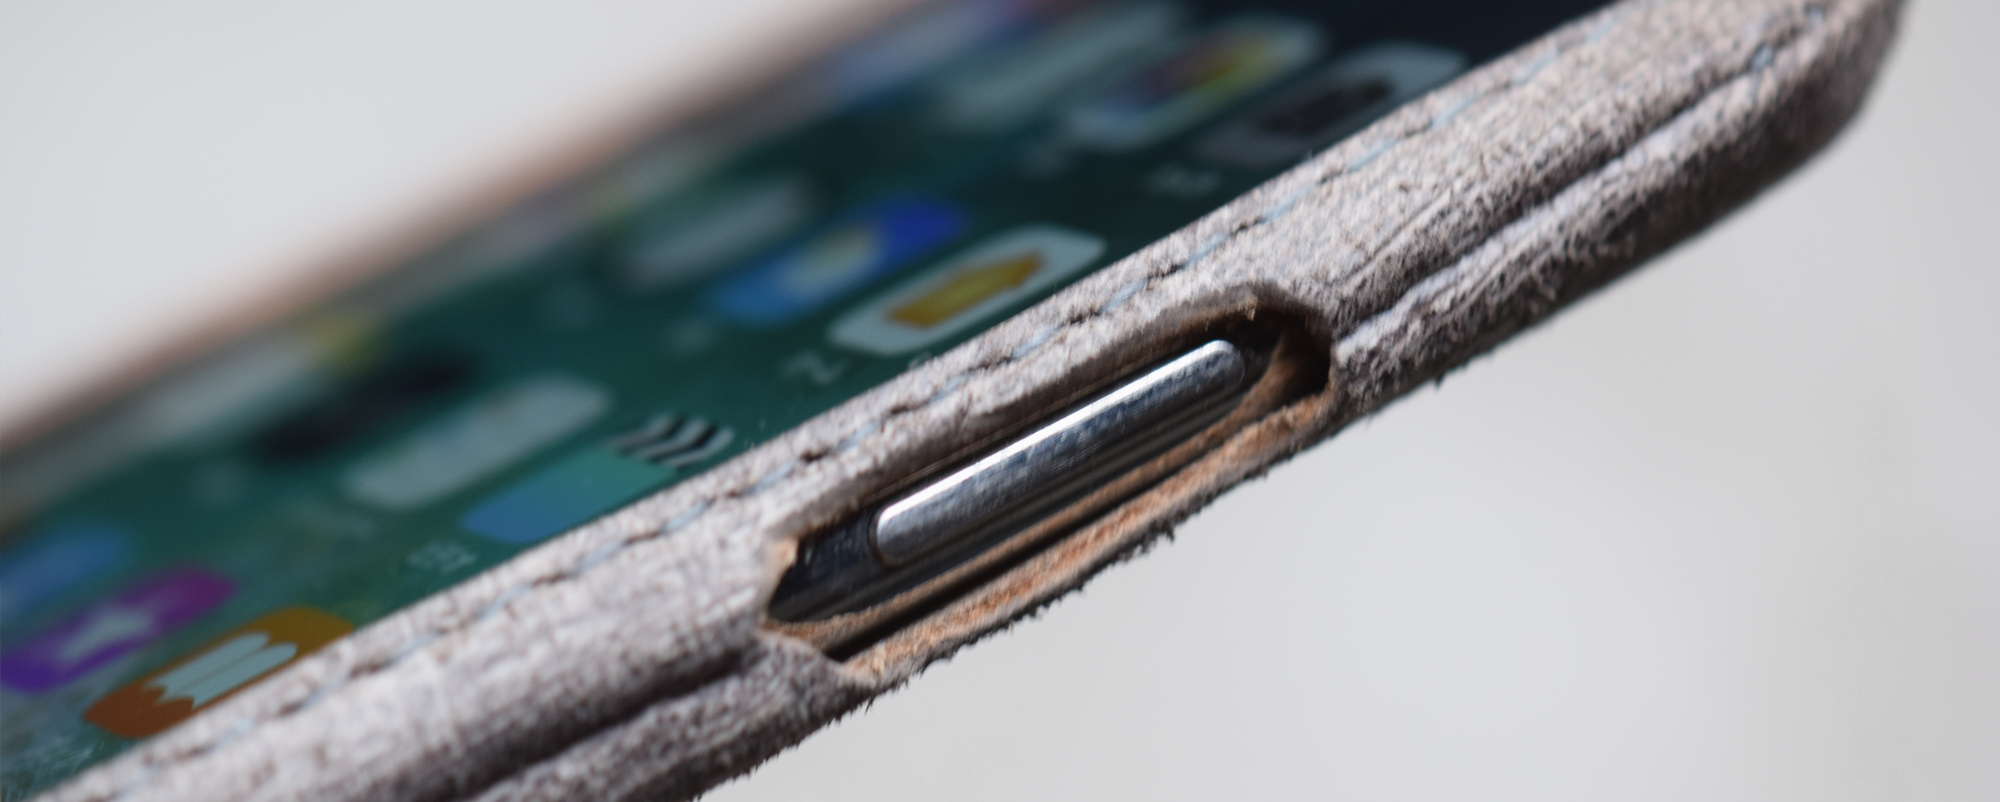 Roberu iPhone XS Italian Embossed Leather Case